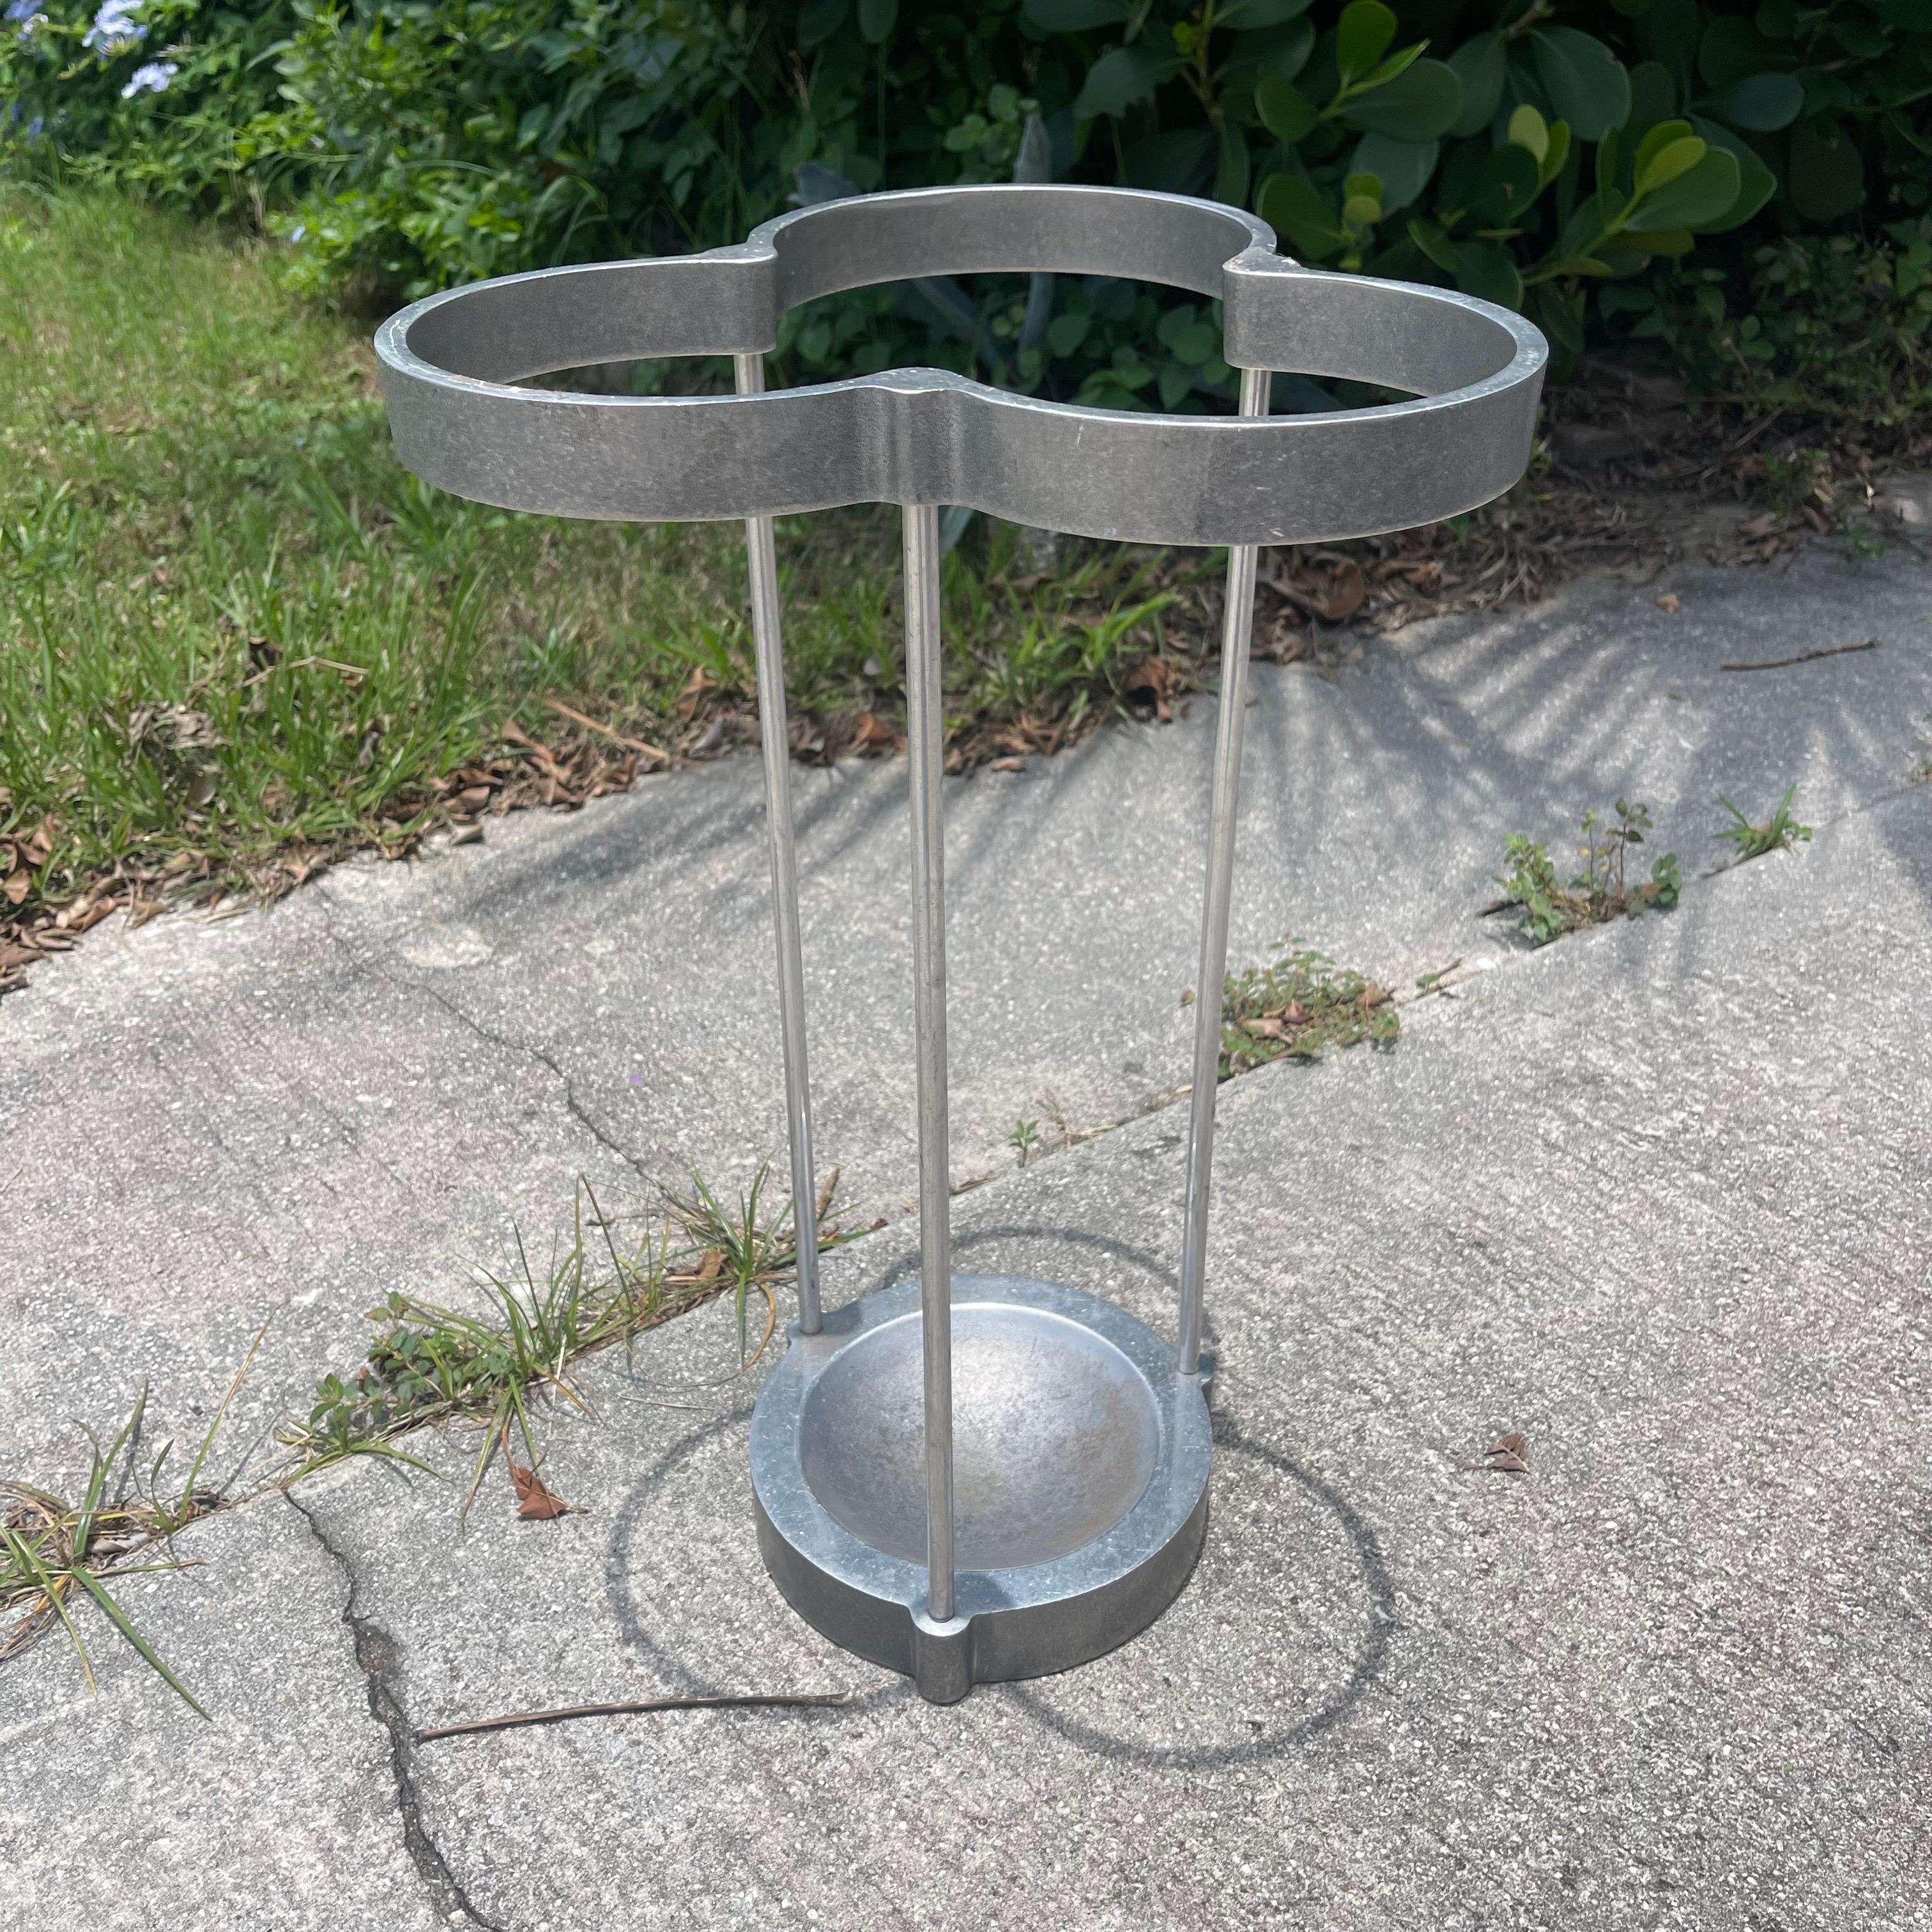 Timeless modernist designed umbrella stand made of cast aluminum.